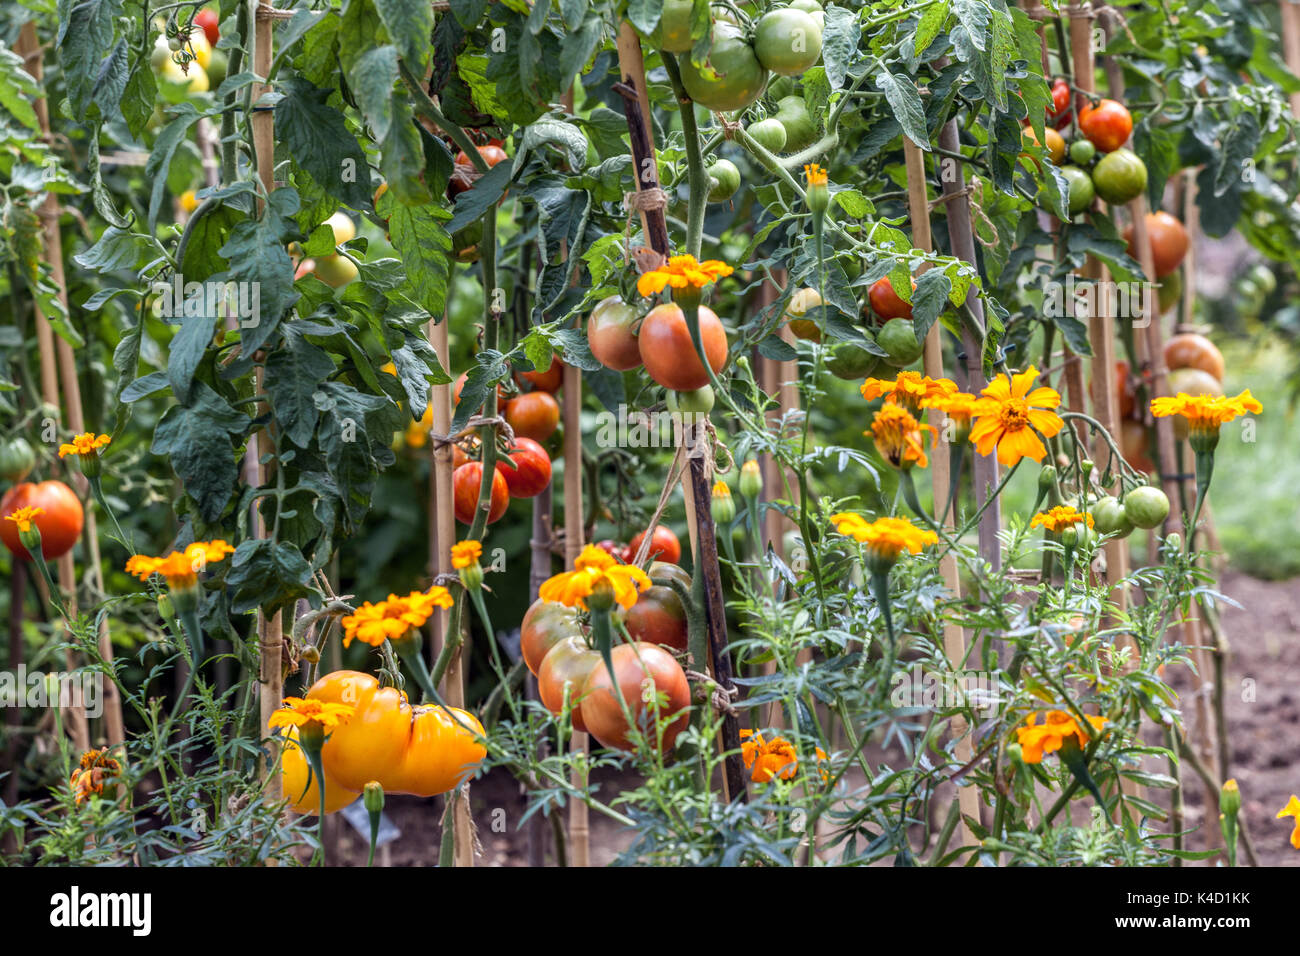 Tagete francese è cresciuta insieme con i pomodori Foto Stock